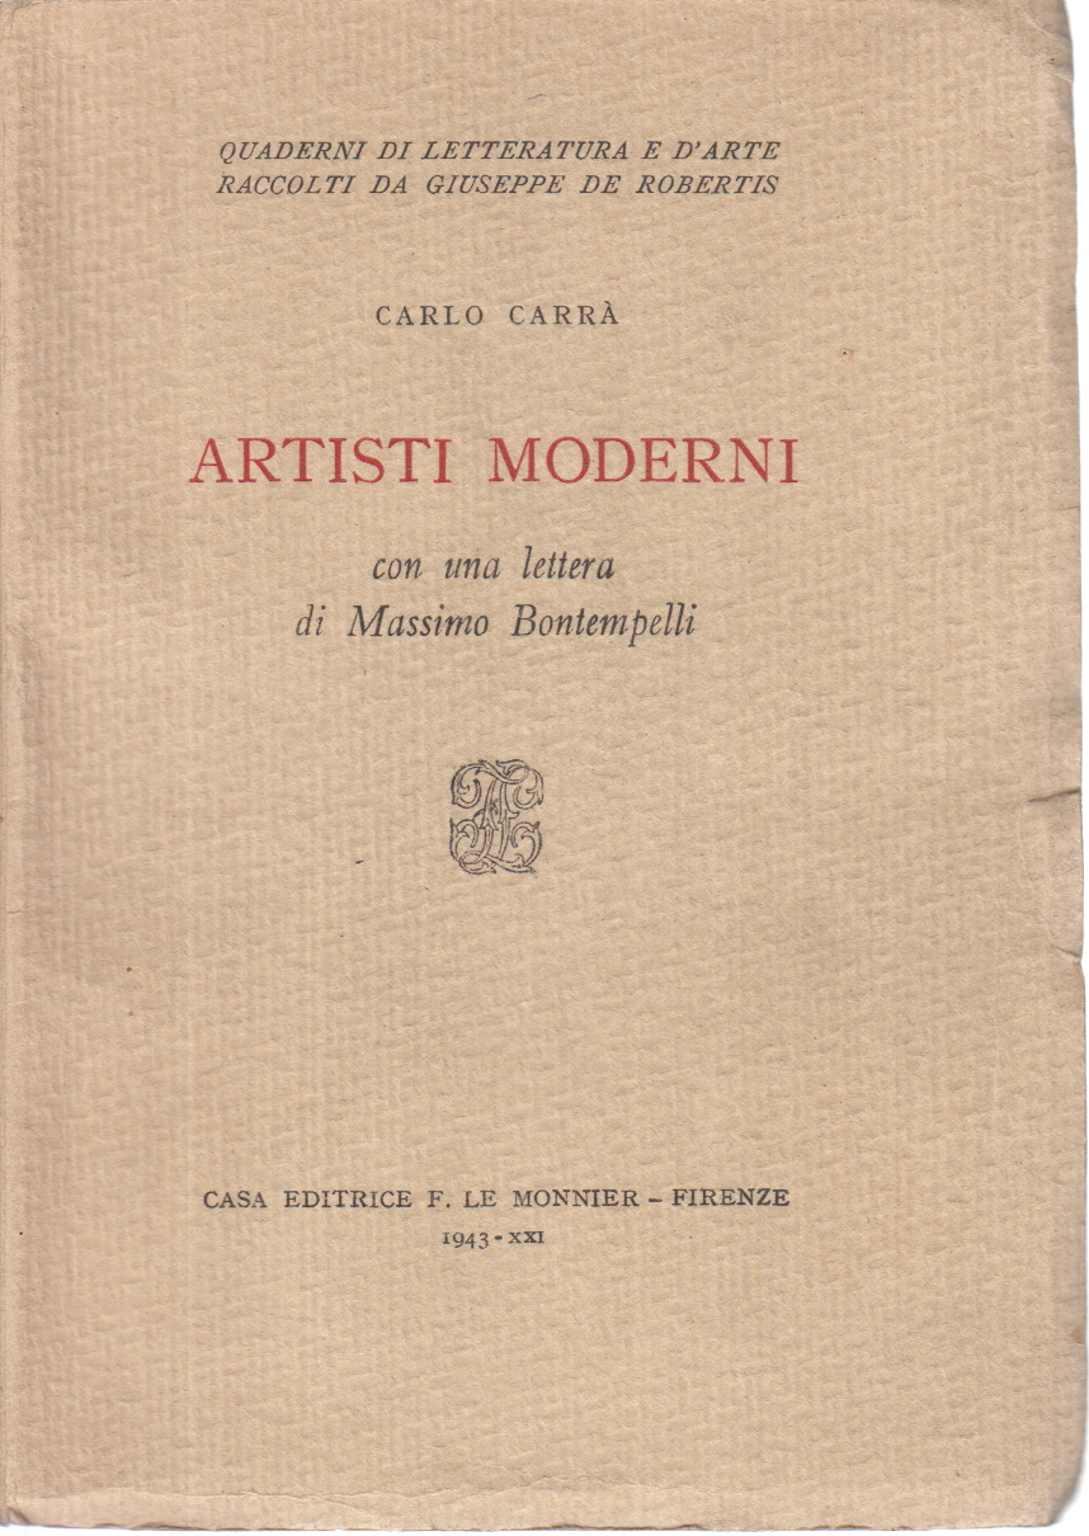 Modern artists, Carlo Carrà